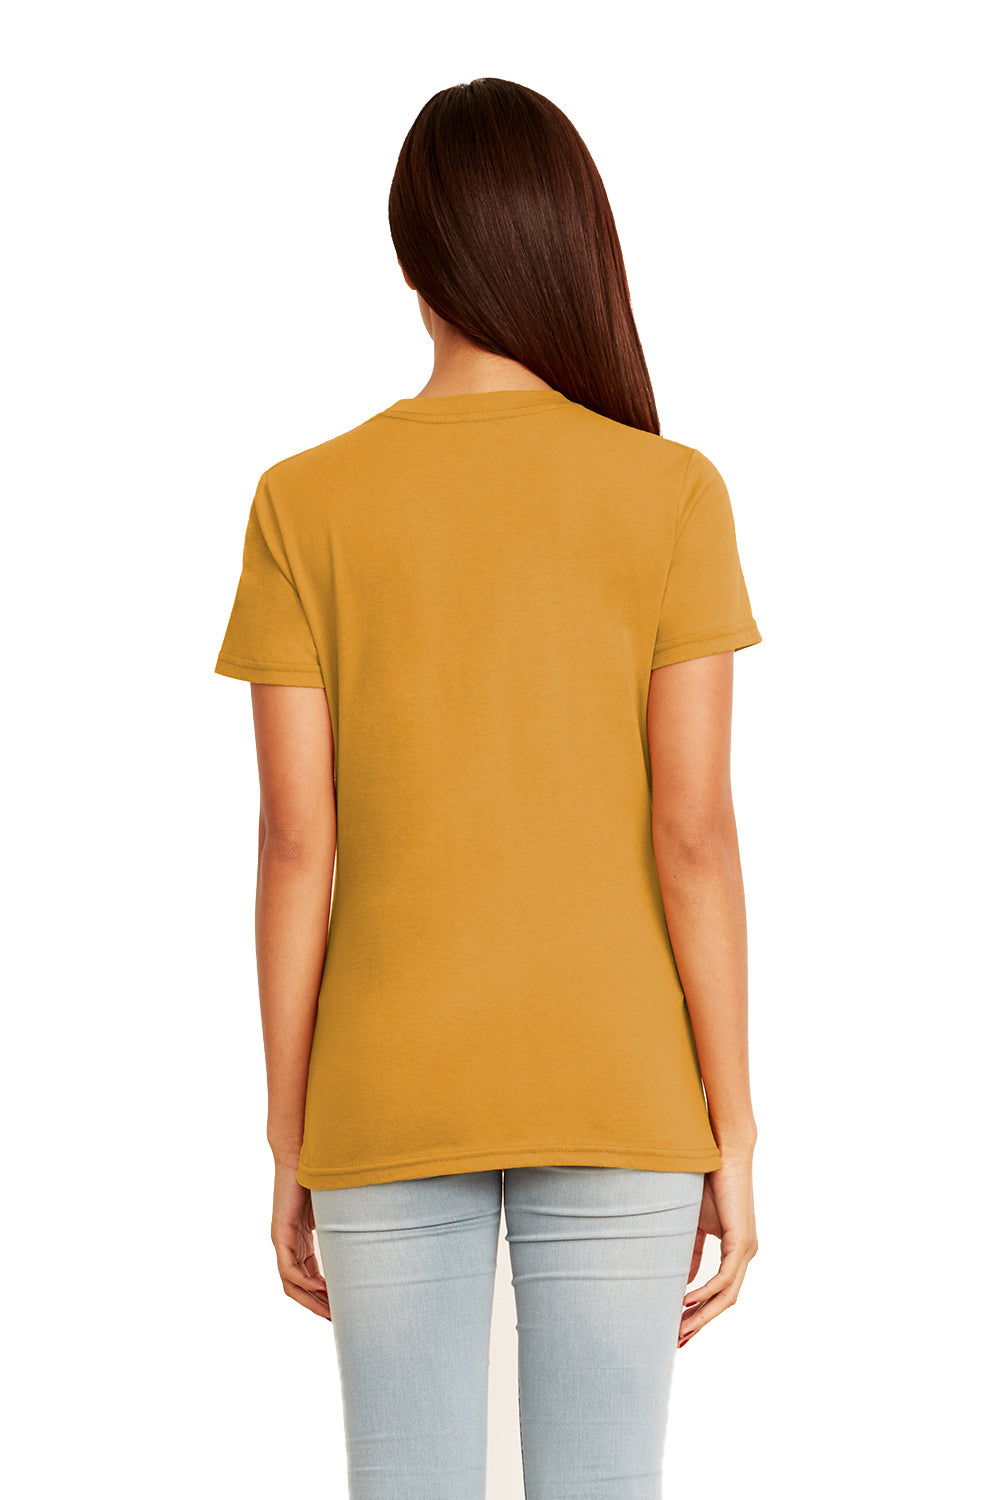 Next Level N3900 Womens Boyfriend Fine Jersey Short Sleeve Crewneck T-Shirt Antique Gold Back